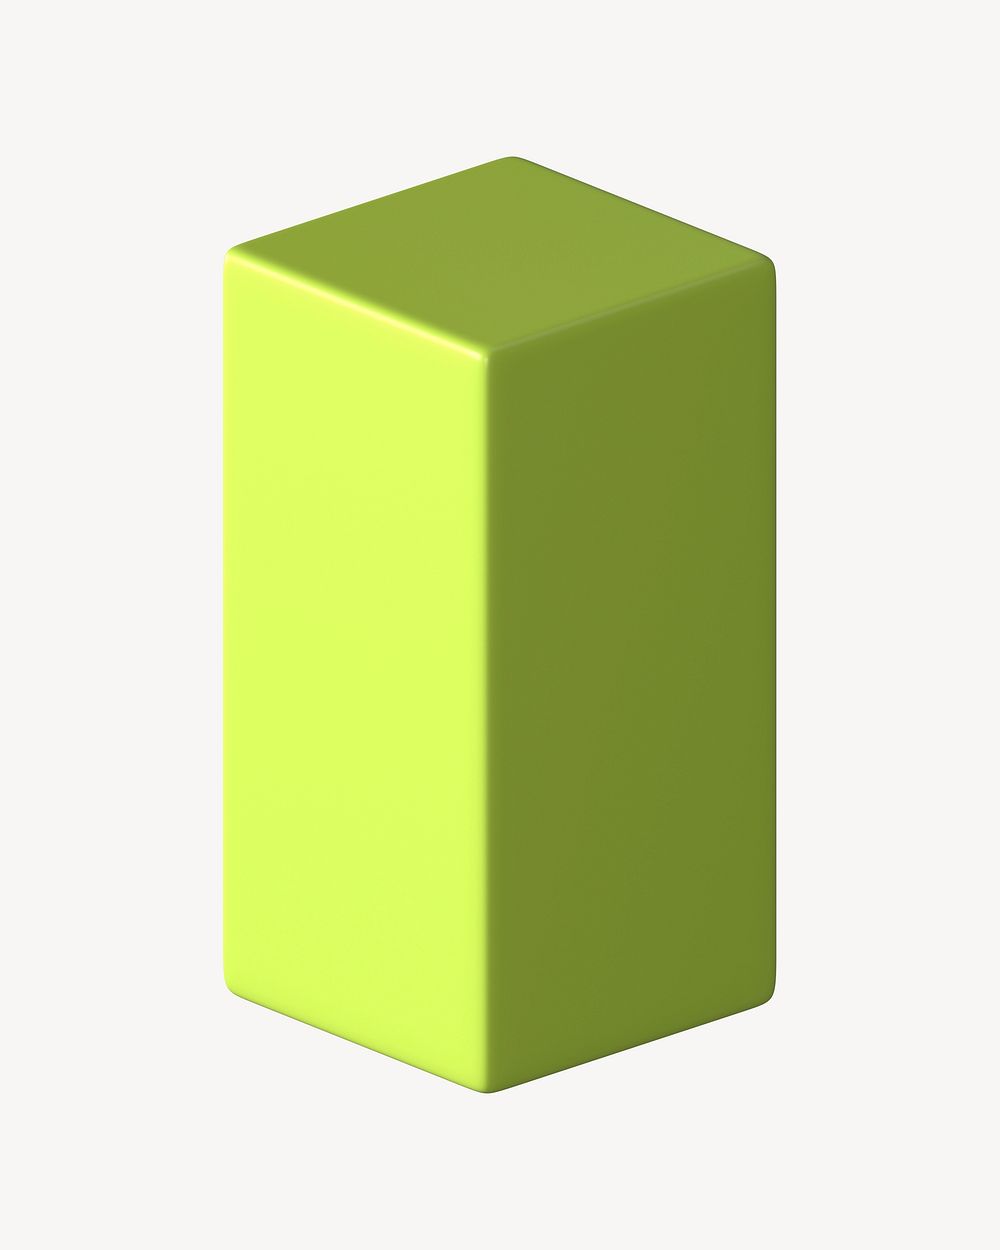 3D green cuboid clipart, geometric shape psd